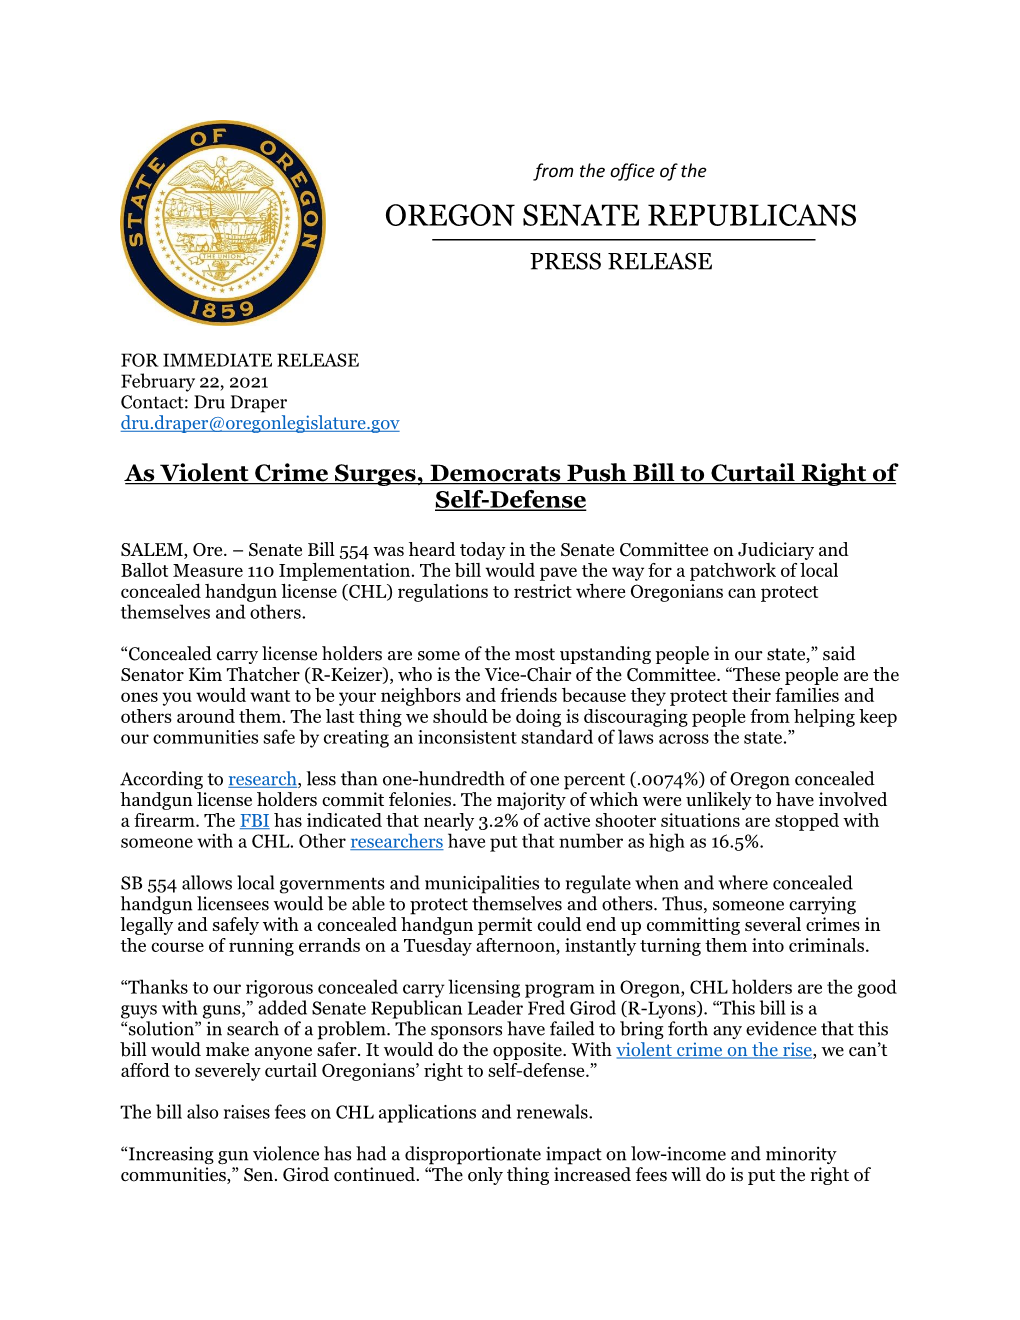 Oregon Senate Republicans Press Release